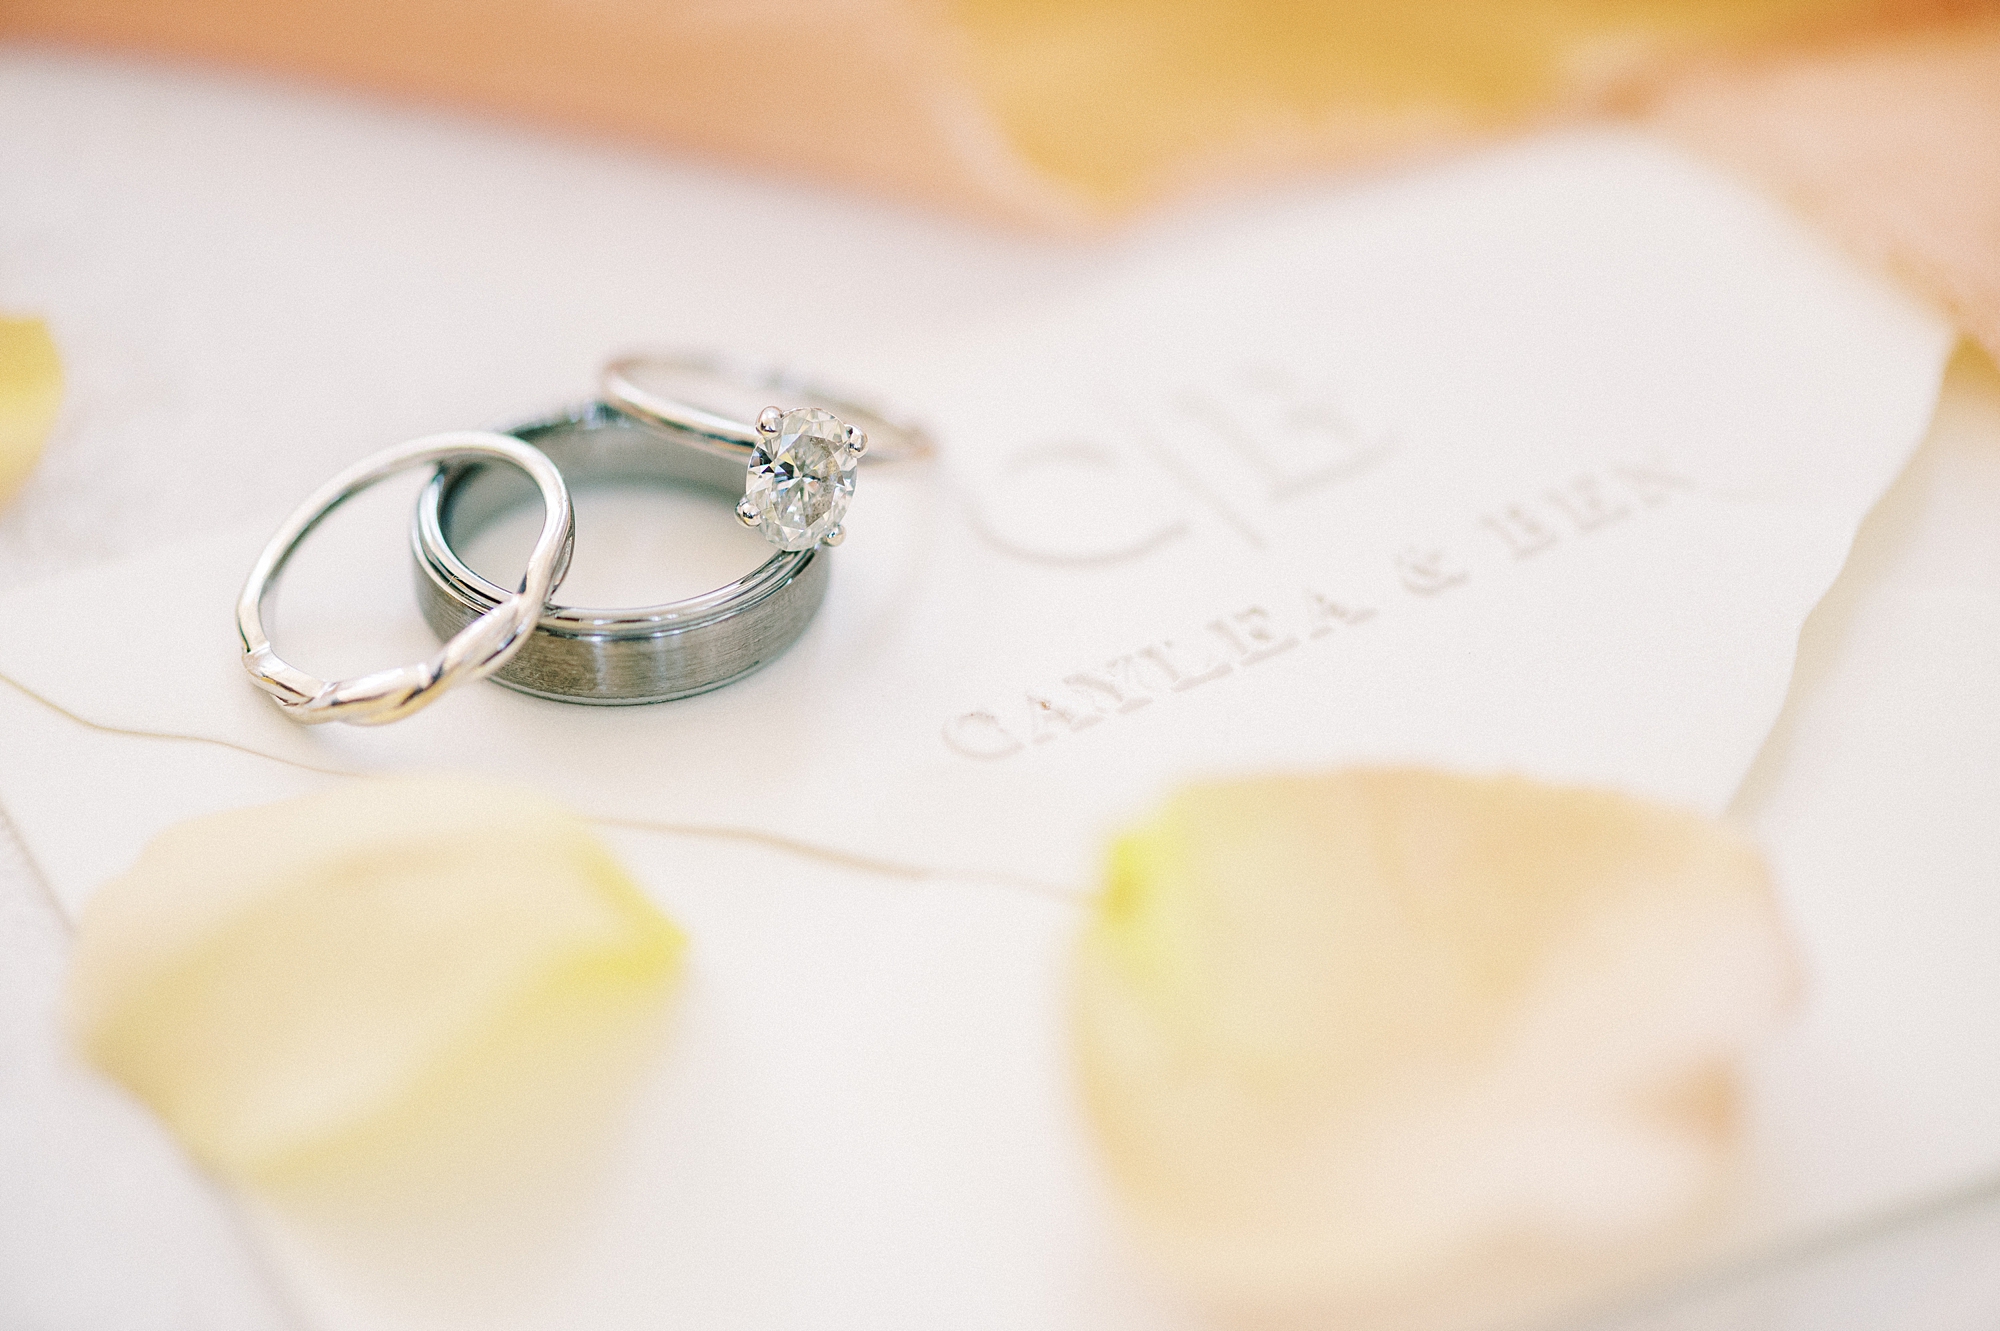 wedding rings lay on envelope with embossed seal 